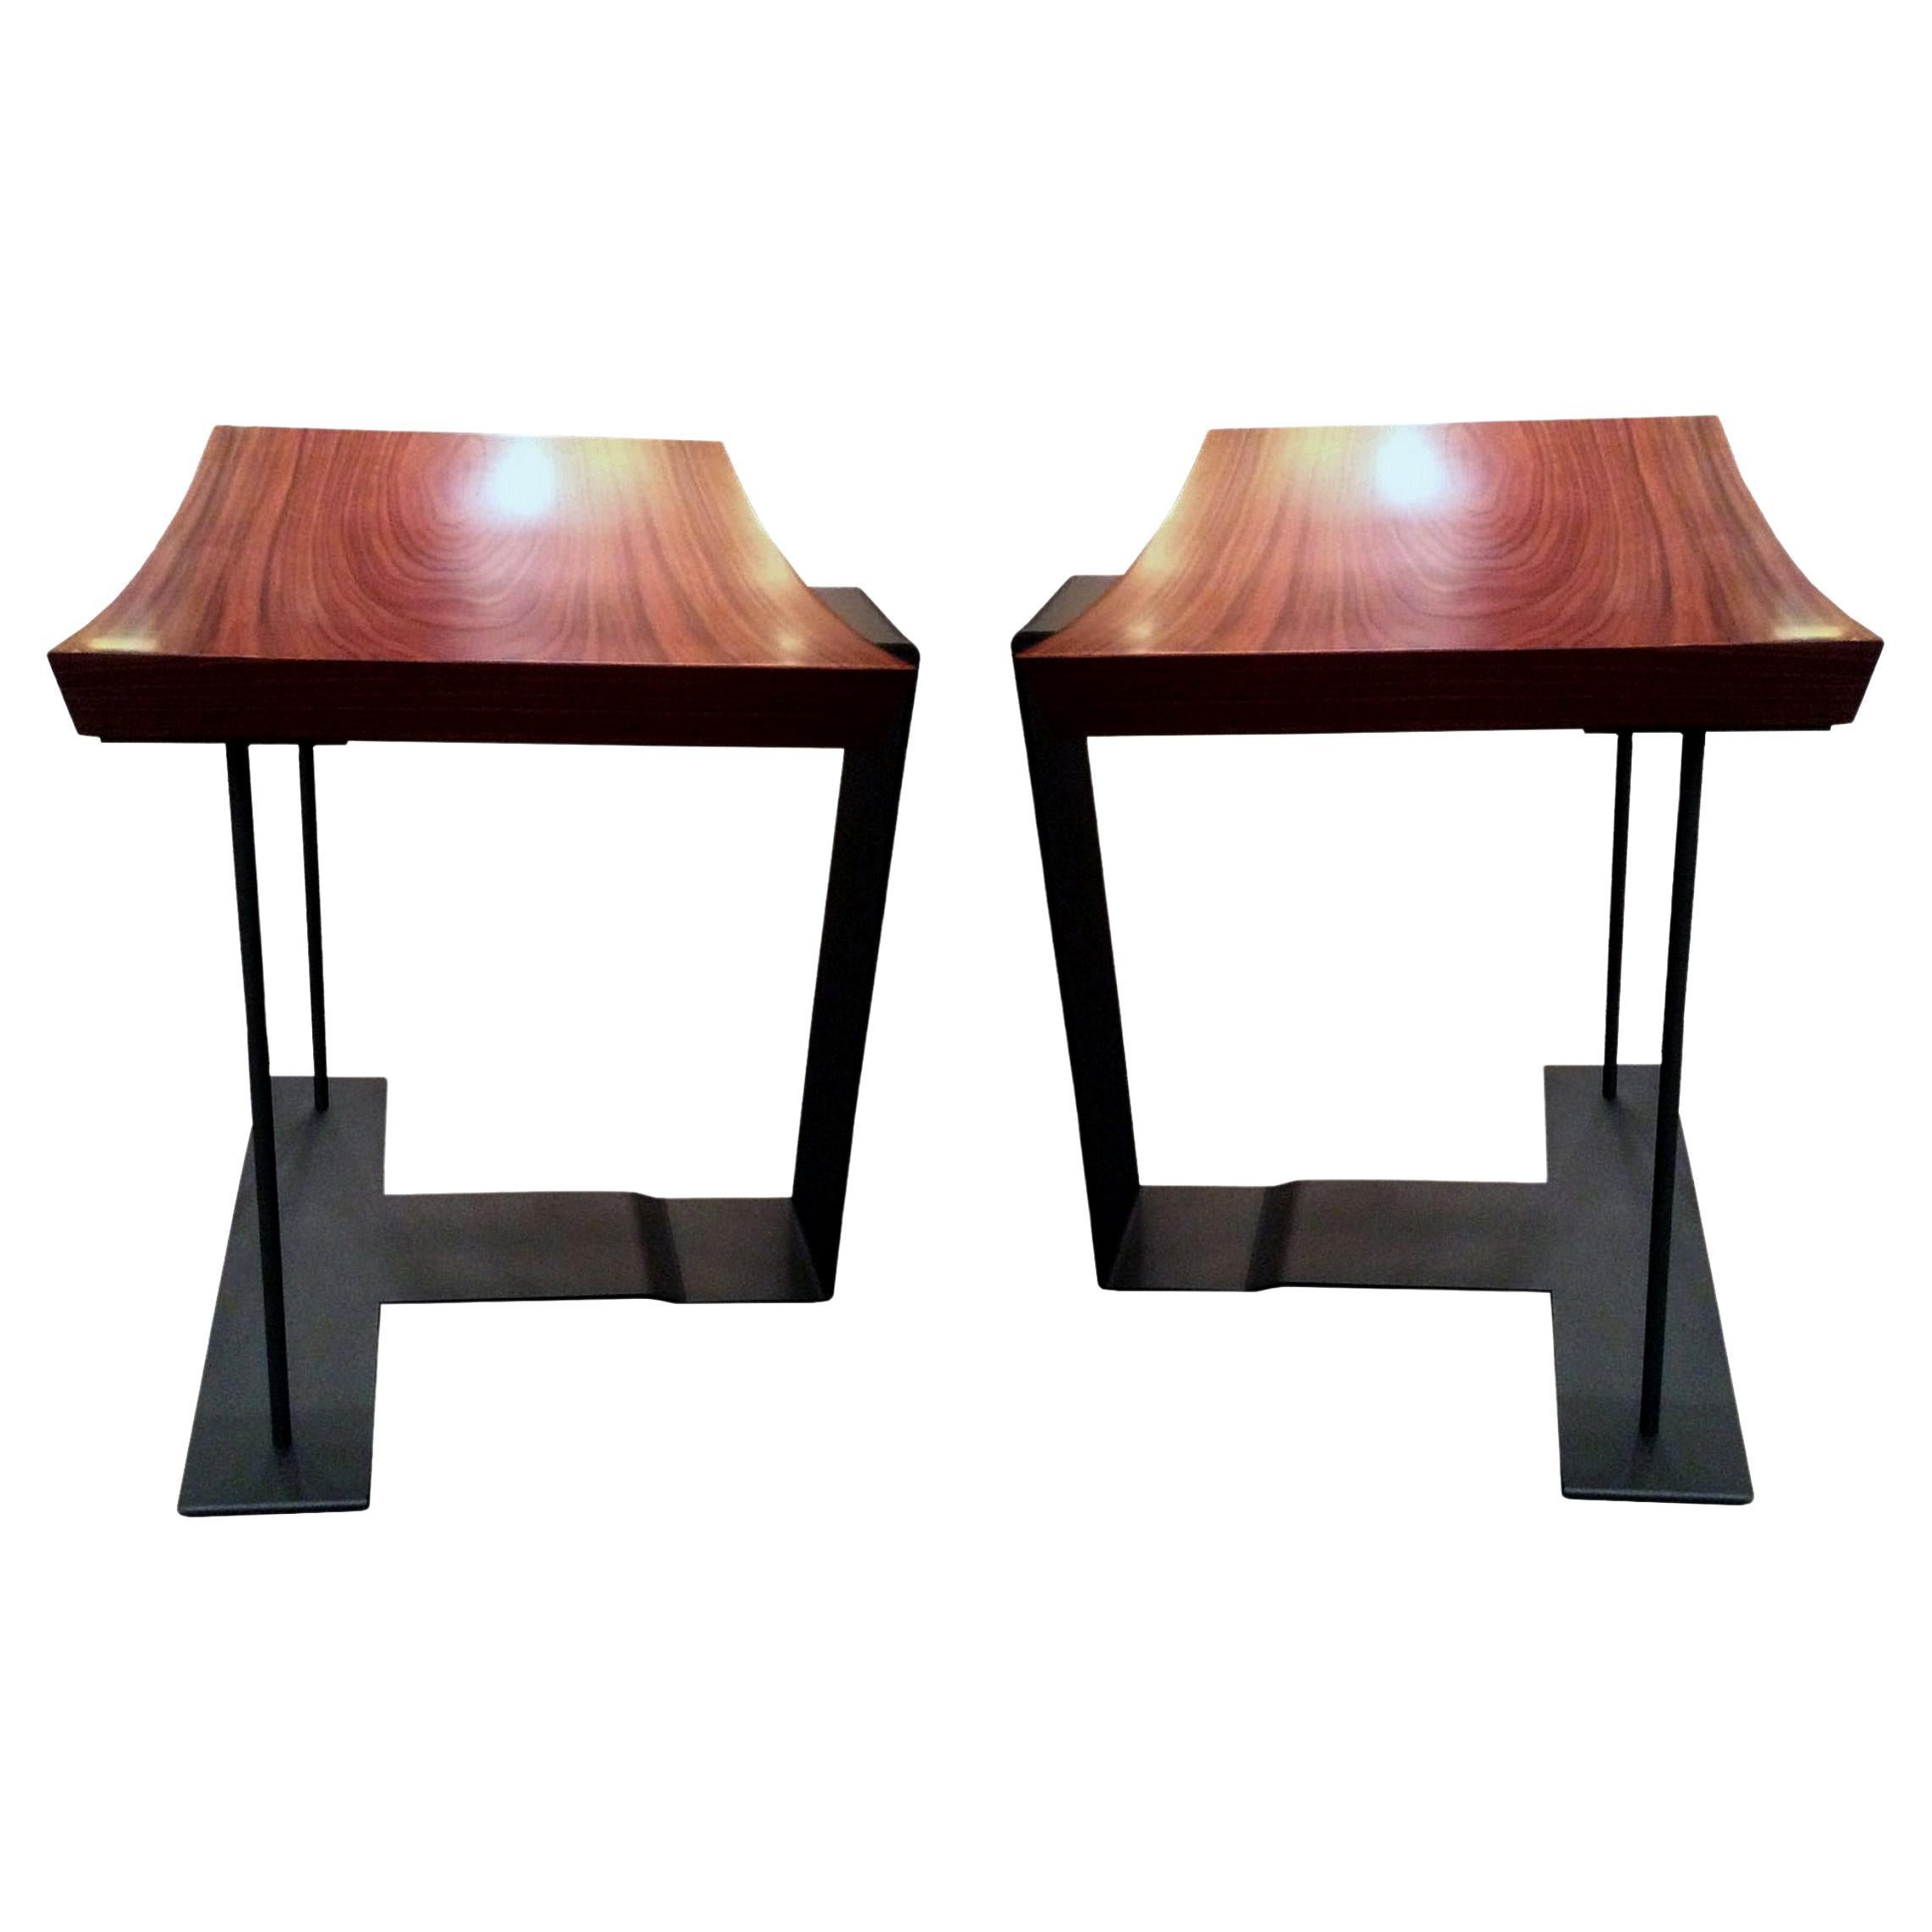 Two “T 1927” model stools, by Pierre Chareau, Ed. Ecart International, France